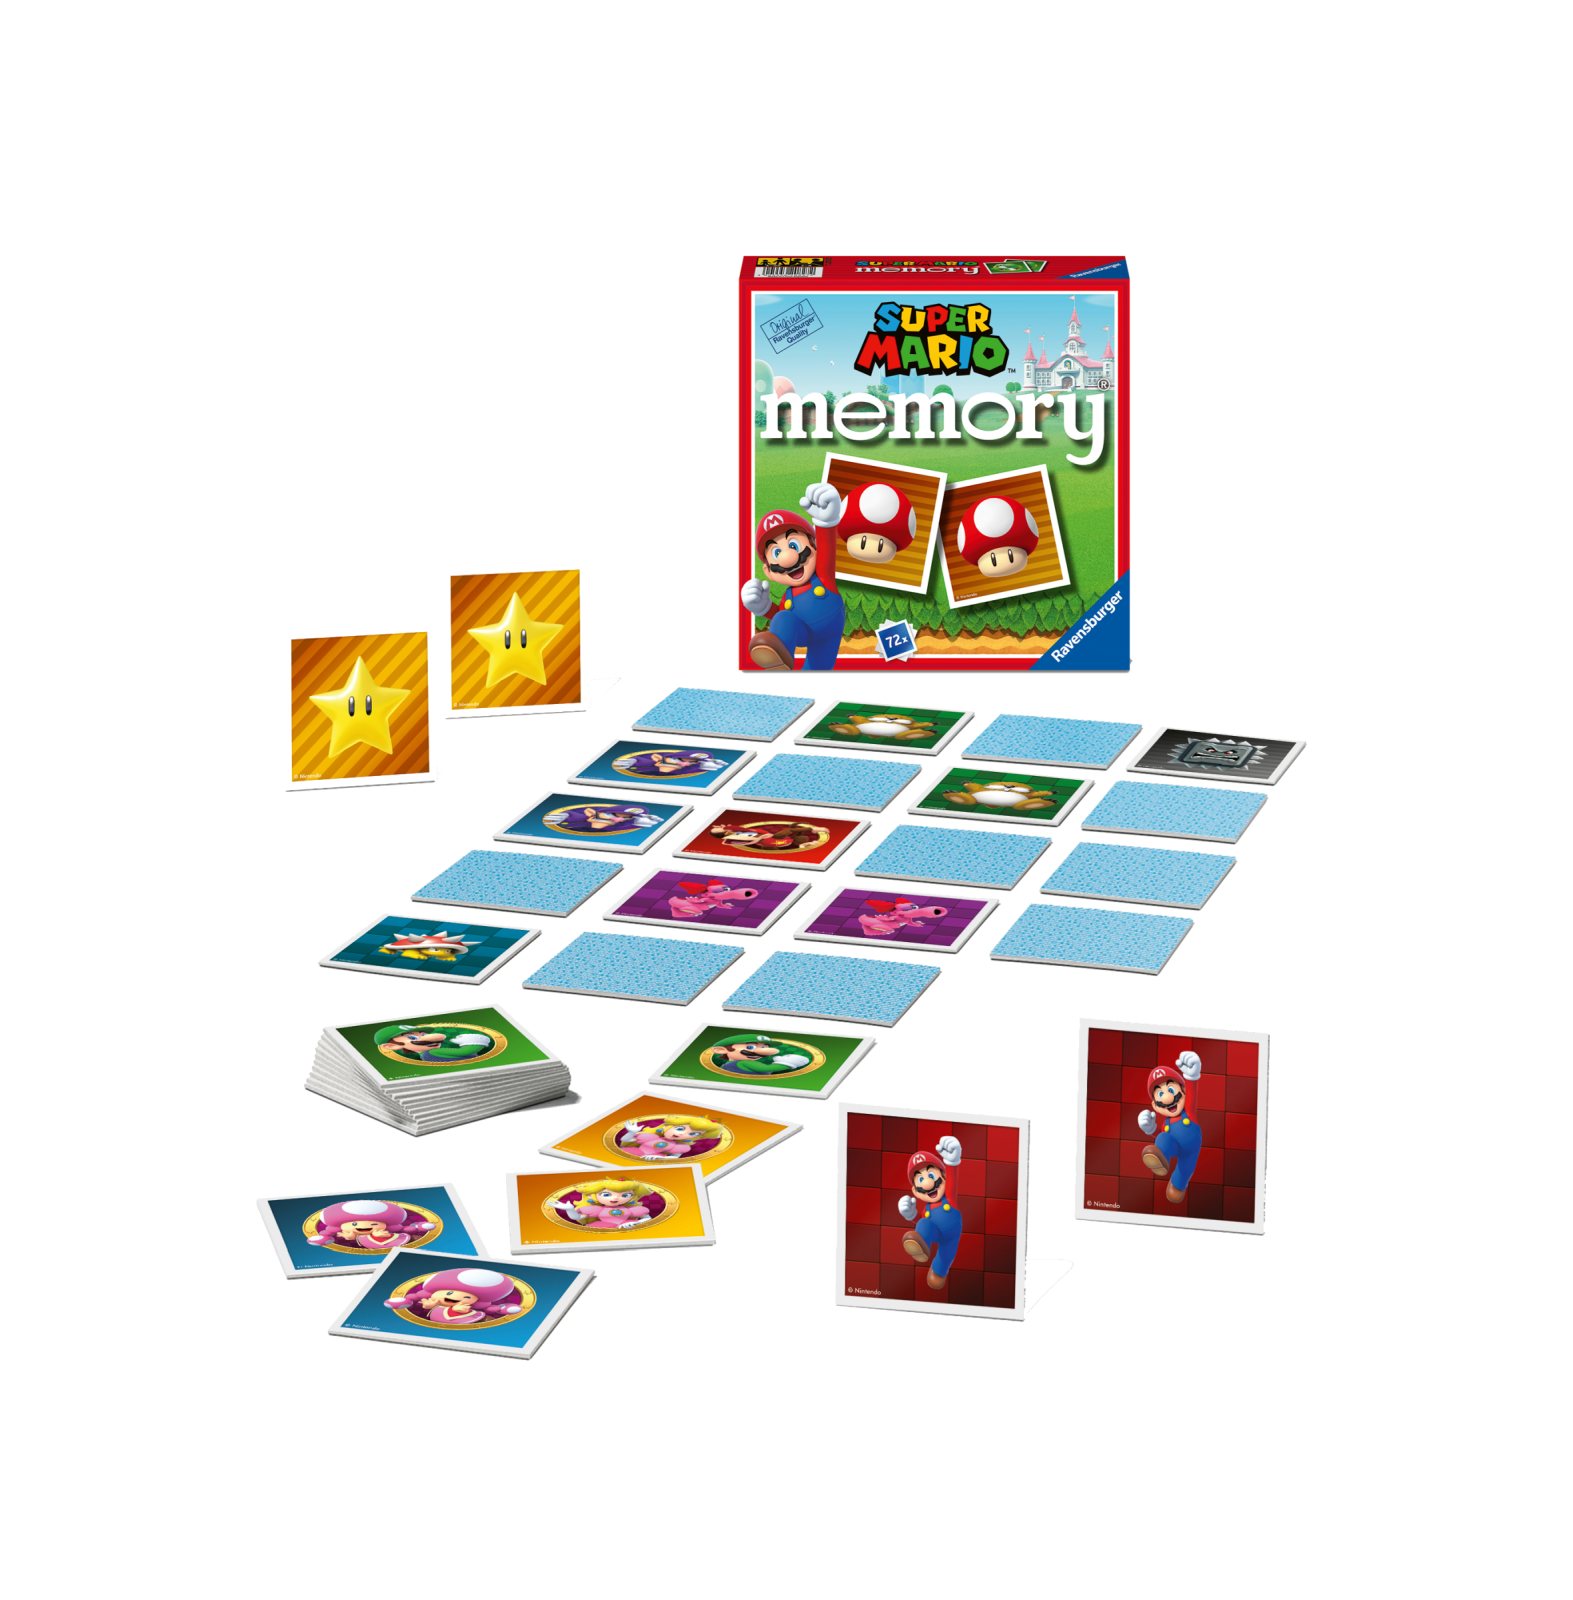 Ravensburger - memory versione super mario, 72 tessere, gioco da tavolo, 4+ anni - RAVENSBURGER, Super Mario